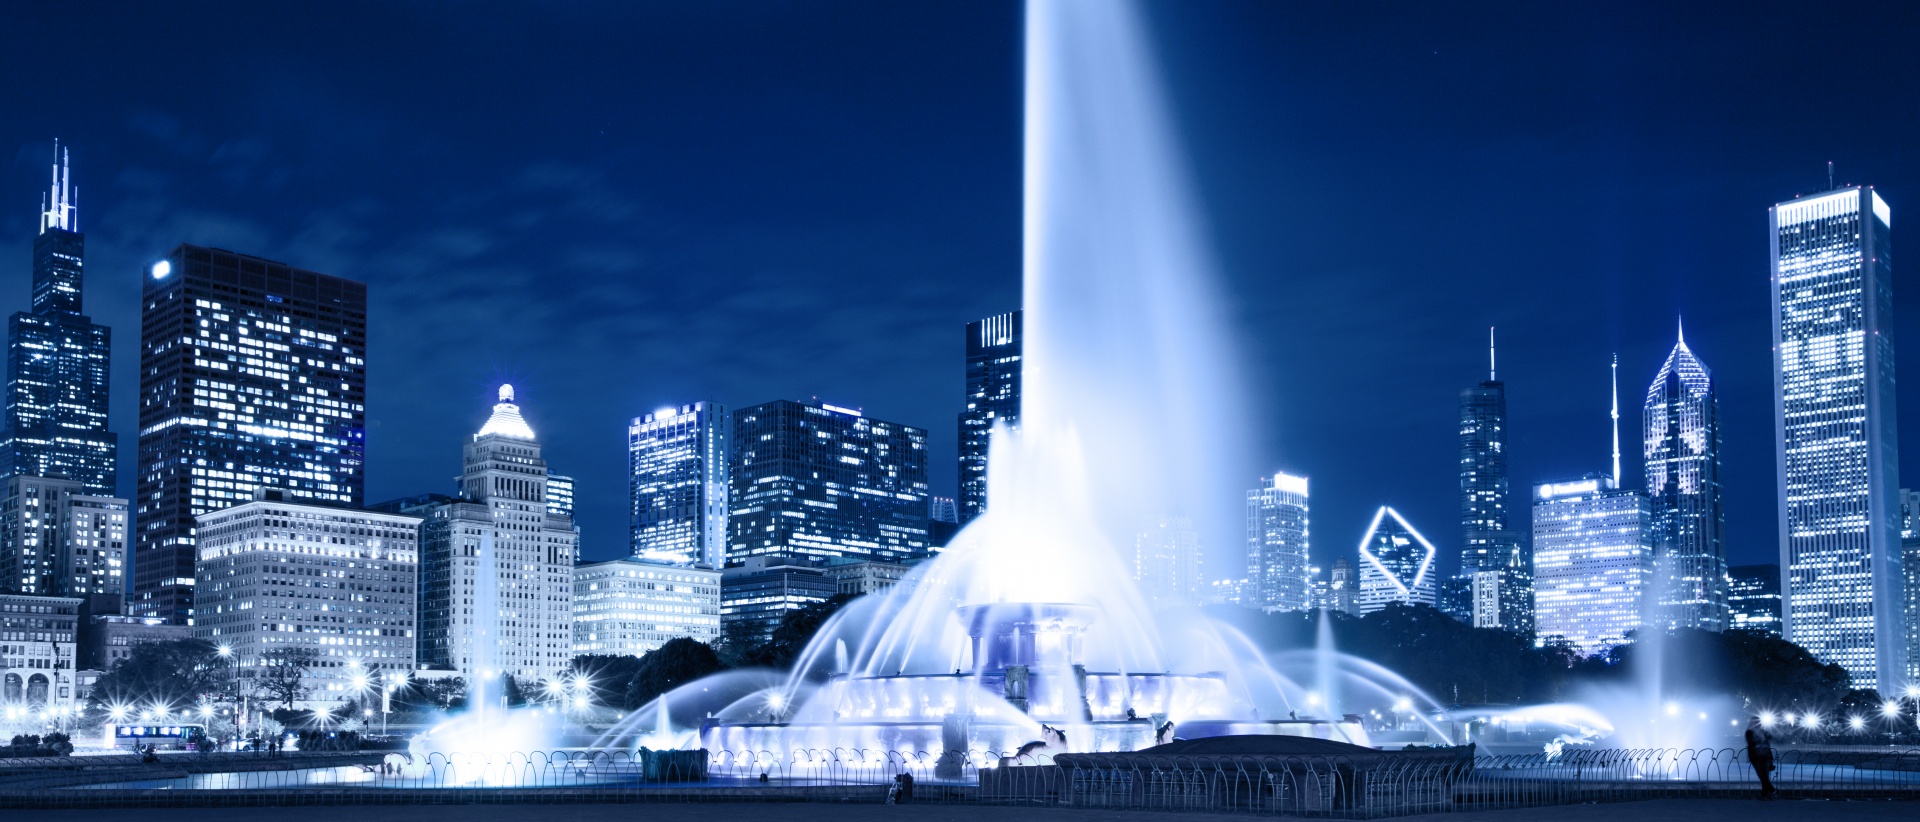 Buckingham Fountain in Chicago at night